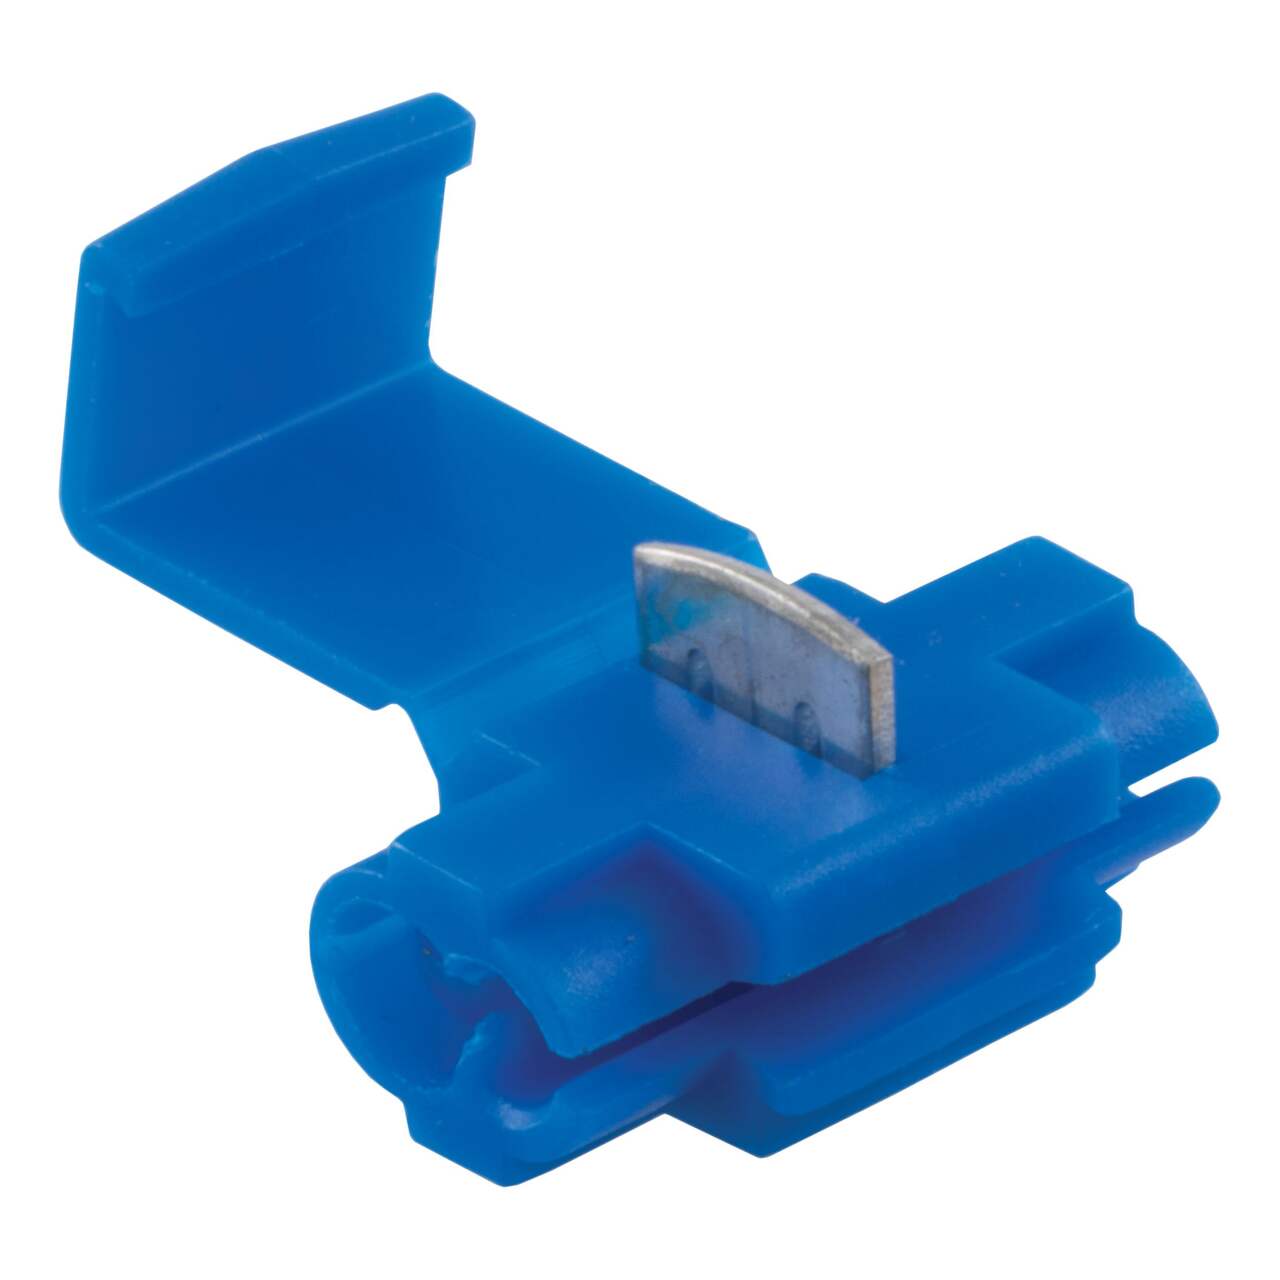 CURT Snap Lock Tap Connectors (18-14 Wire Gauge, 100-pk